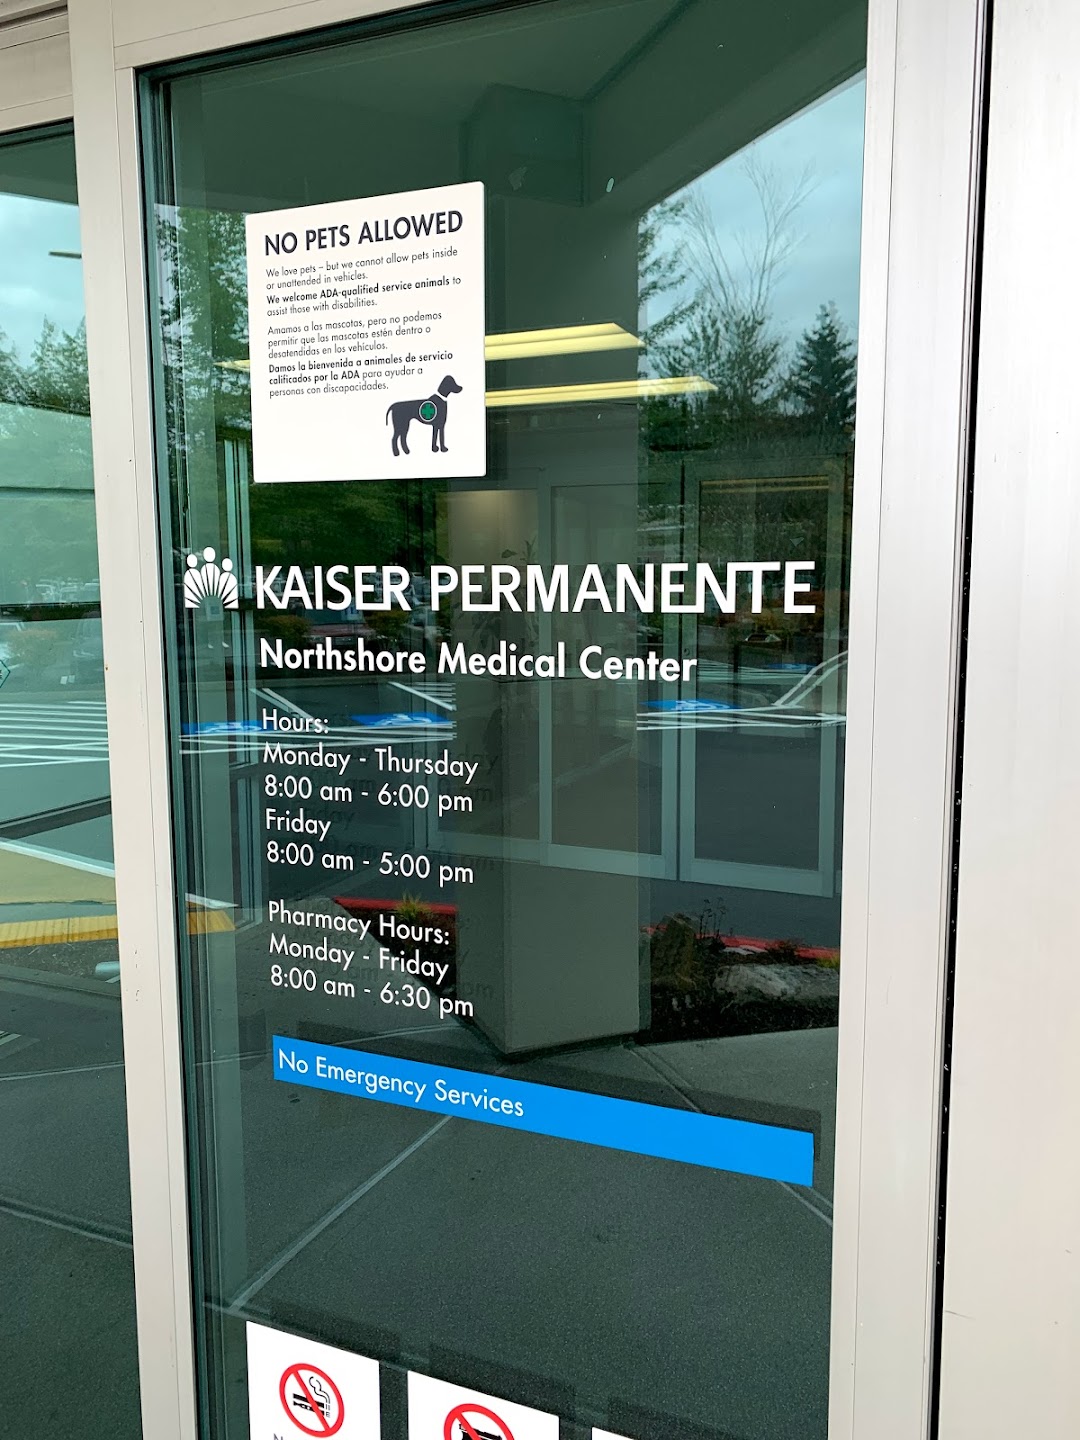 Primary Care Kaiser Permanente Northshore Medical Center